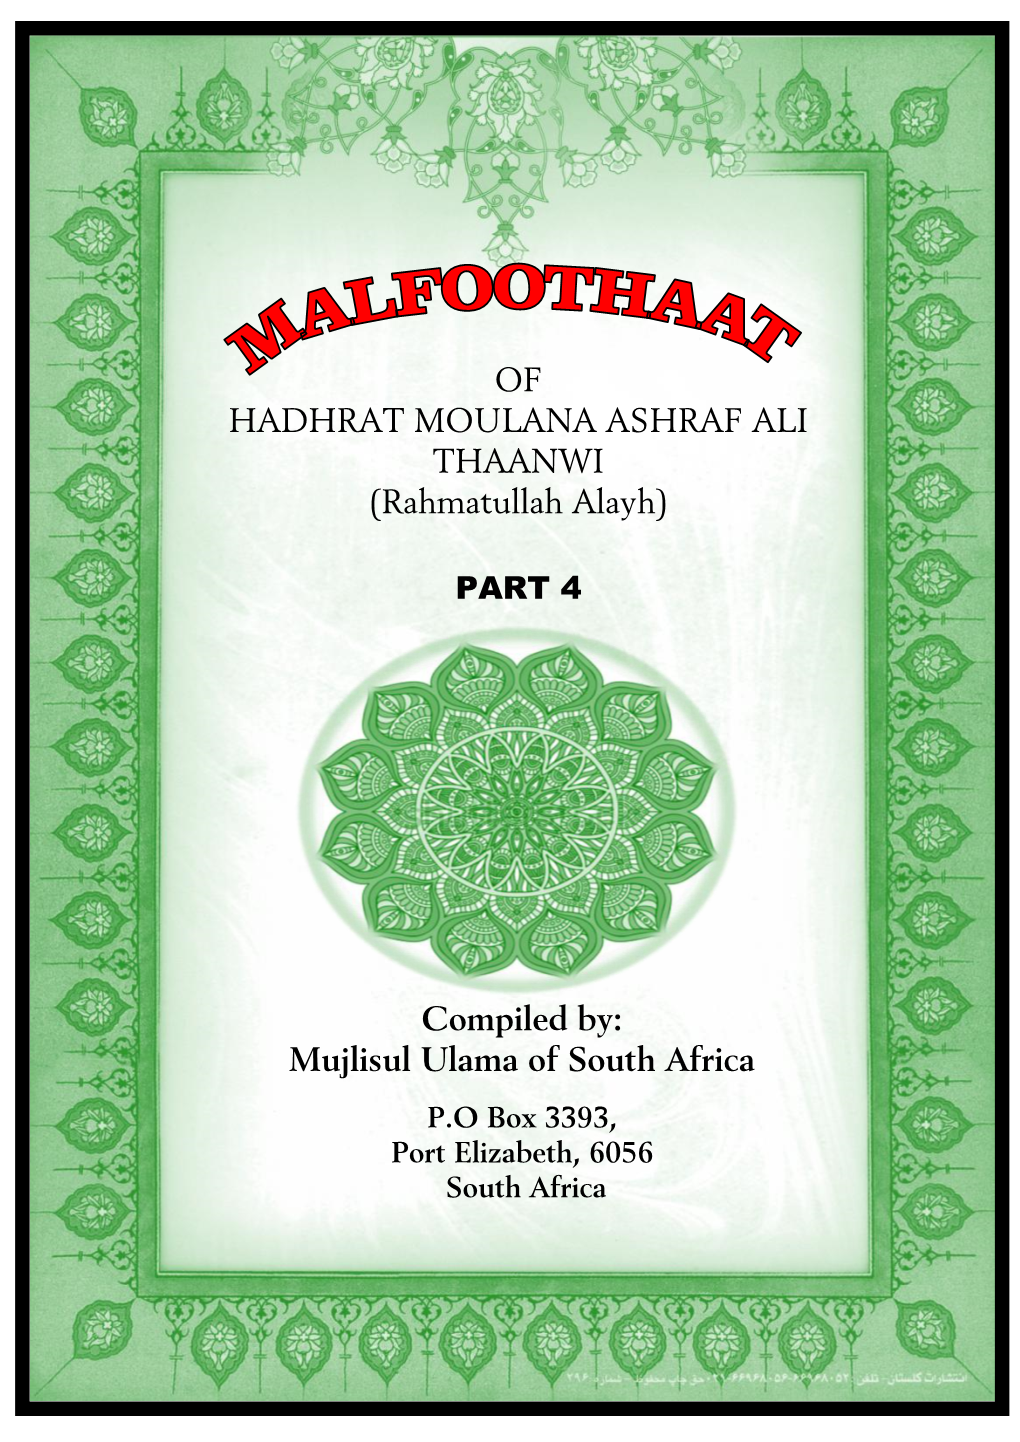 OF HADHRAT MOULANA ASHRAF ALI THAANWI (Rahmatullah Alayh)